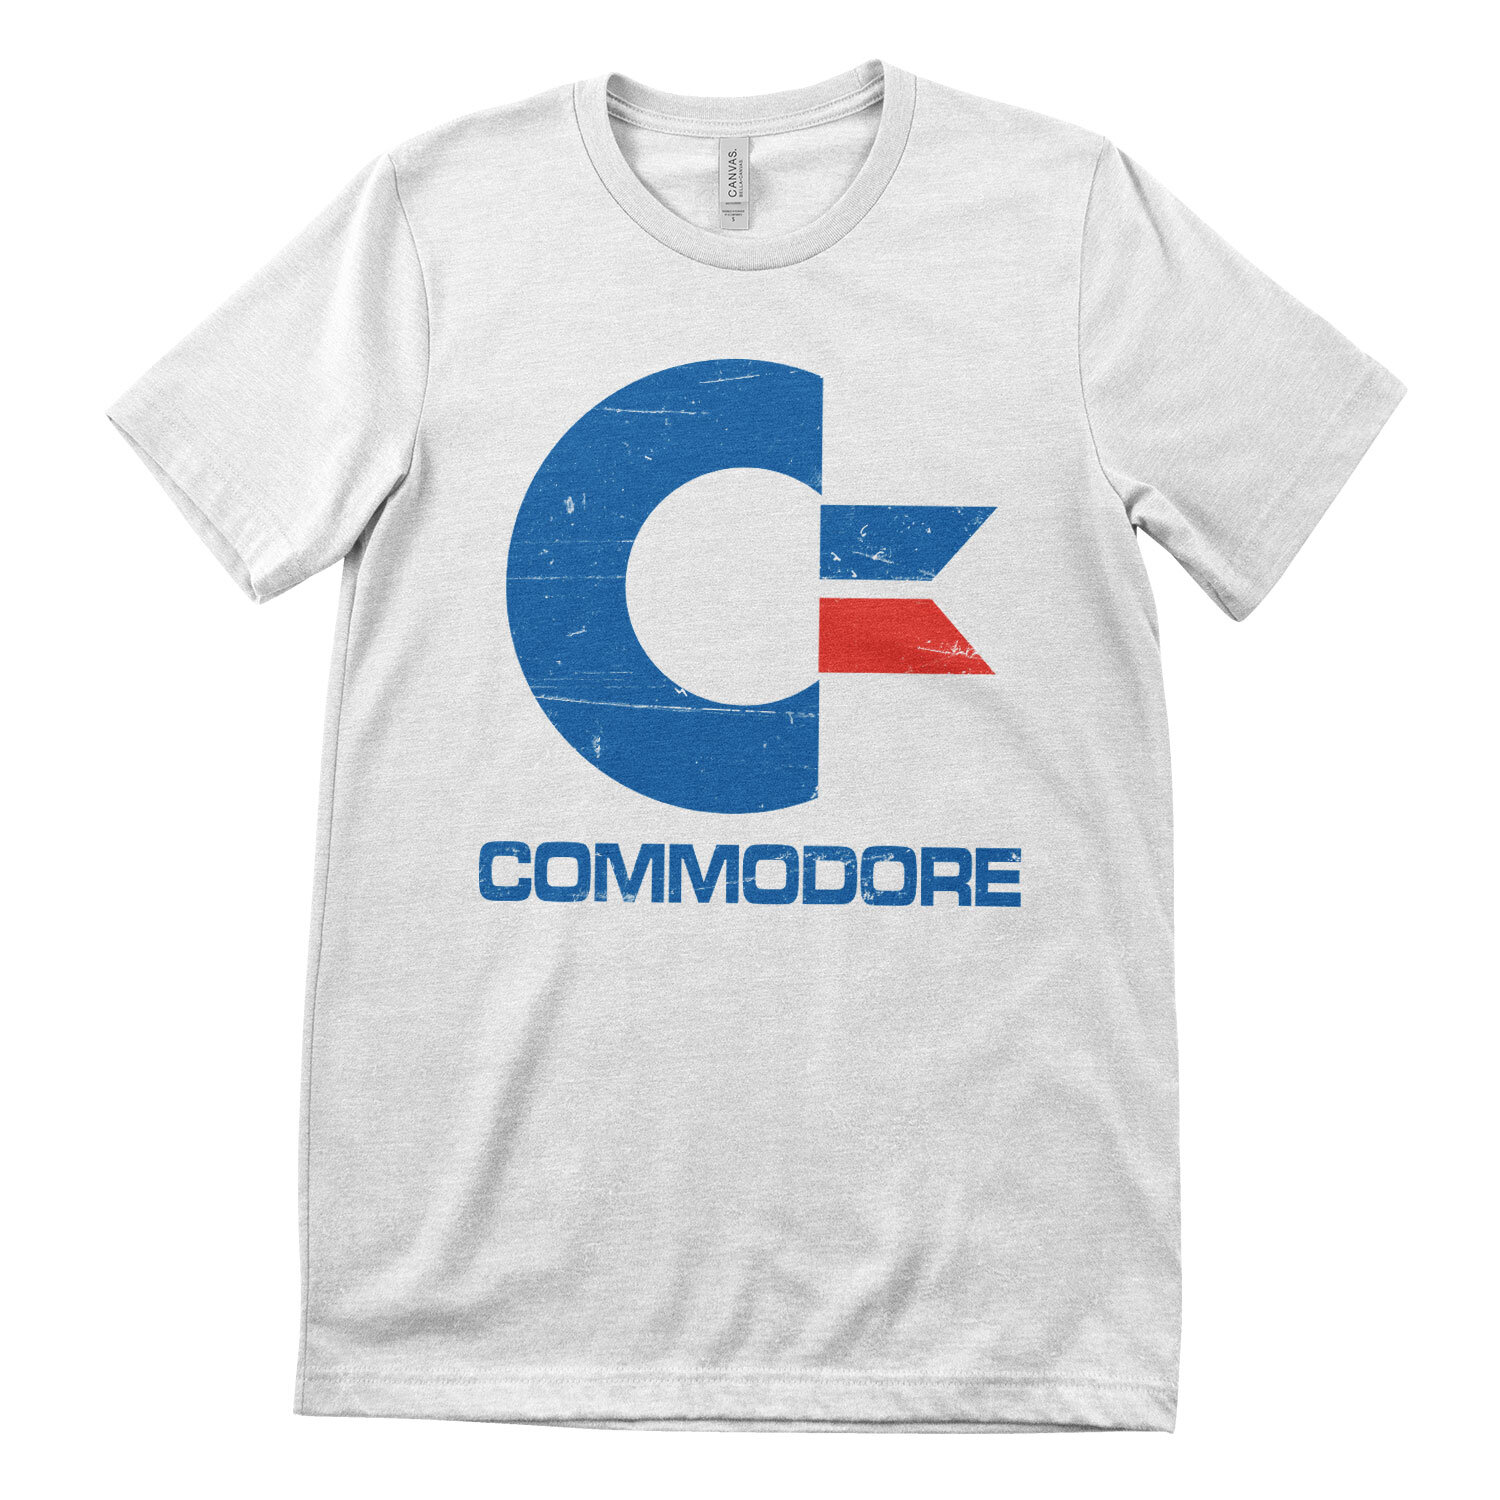 Commodore Vintage Logo T-Shirt